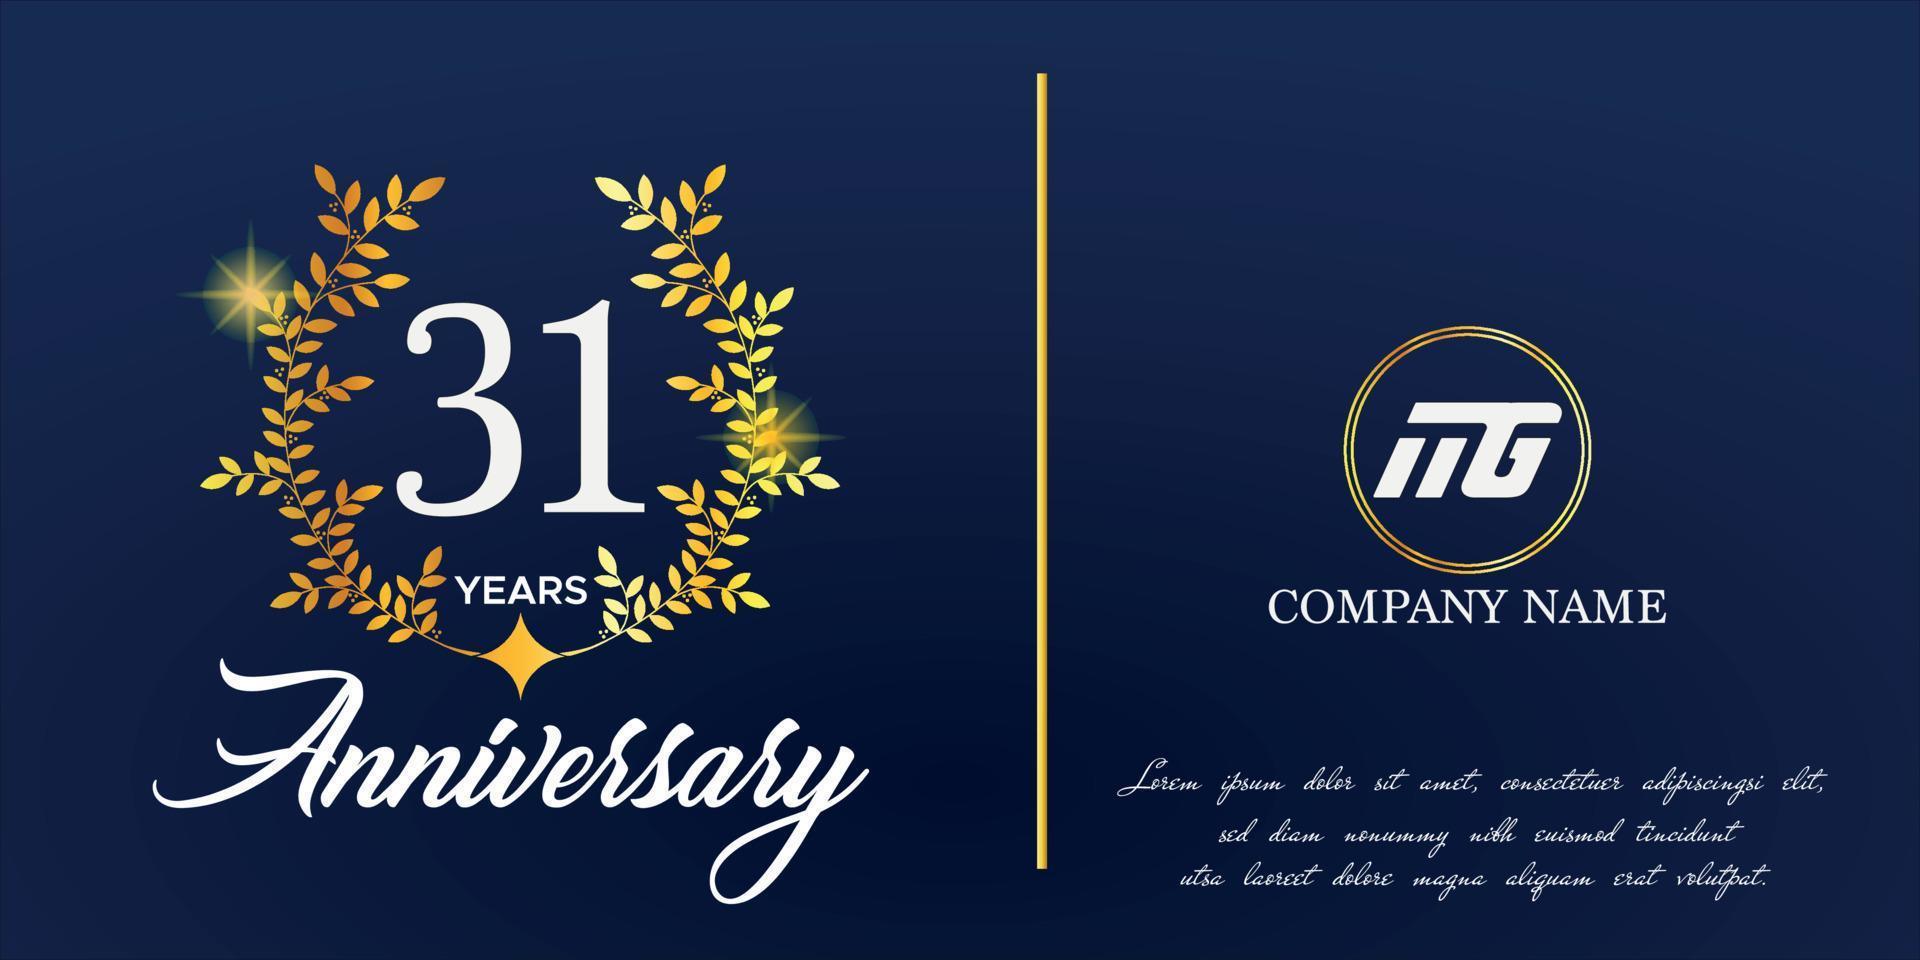 31st anniversary logo with elegant ornament monogram and logo name template on elegant blue background, sparkle, vector design for greeting card.